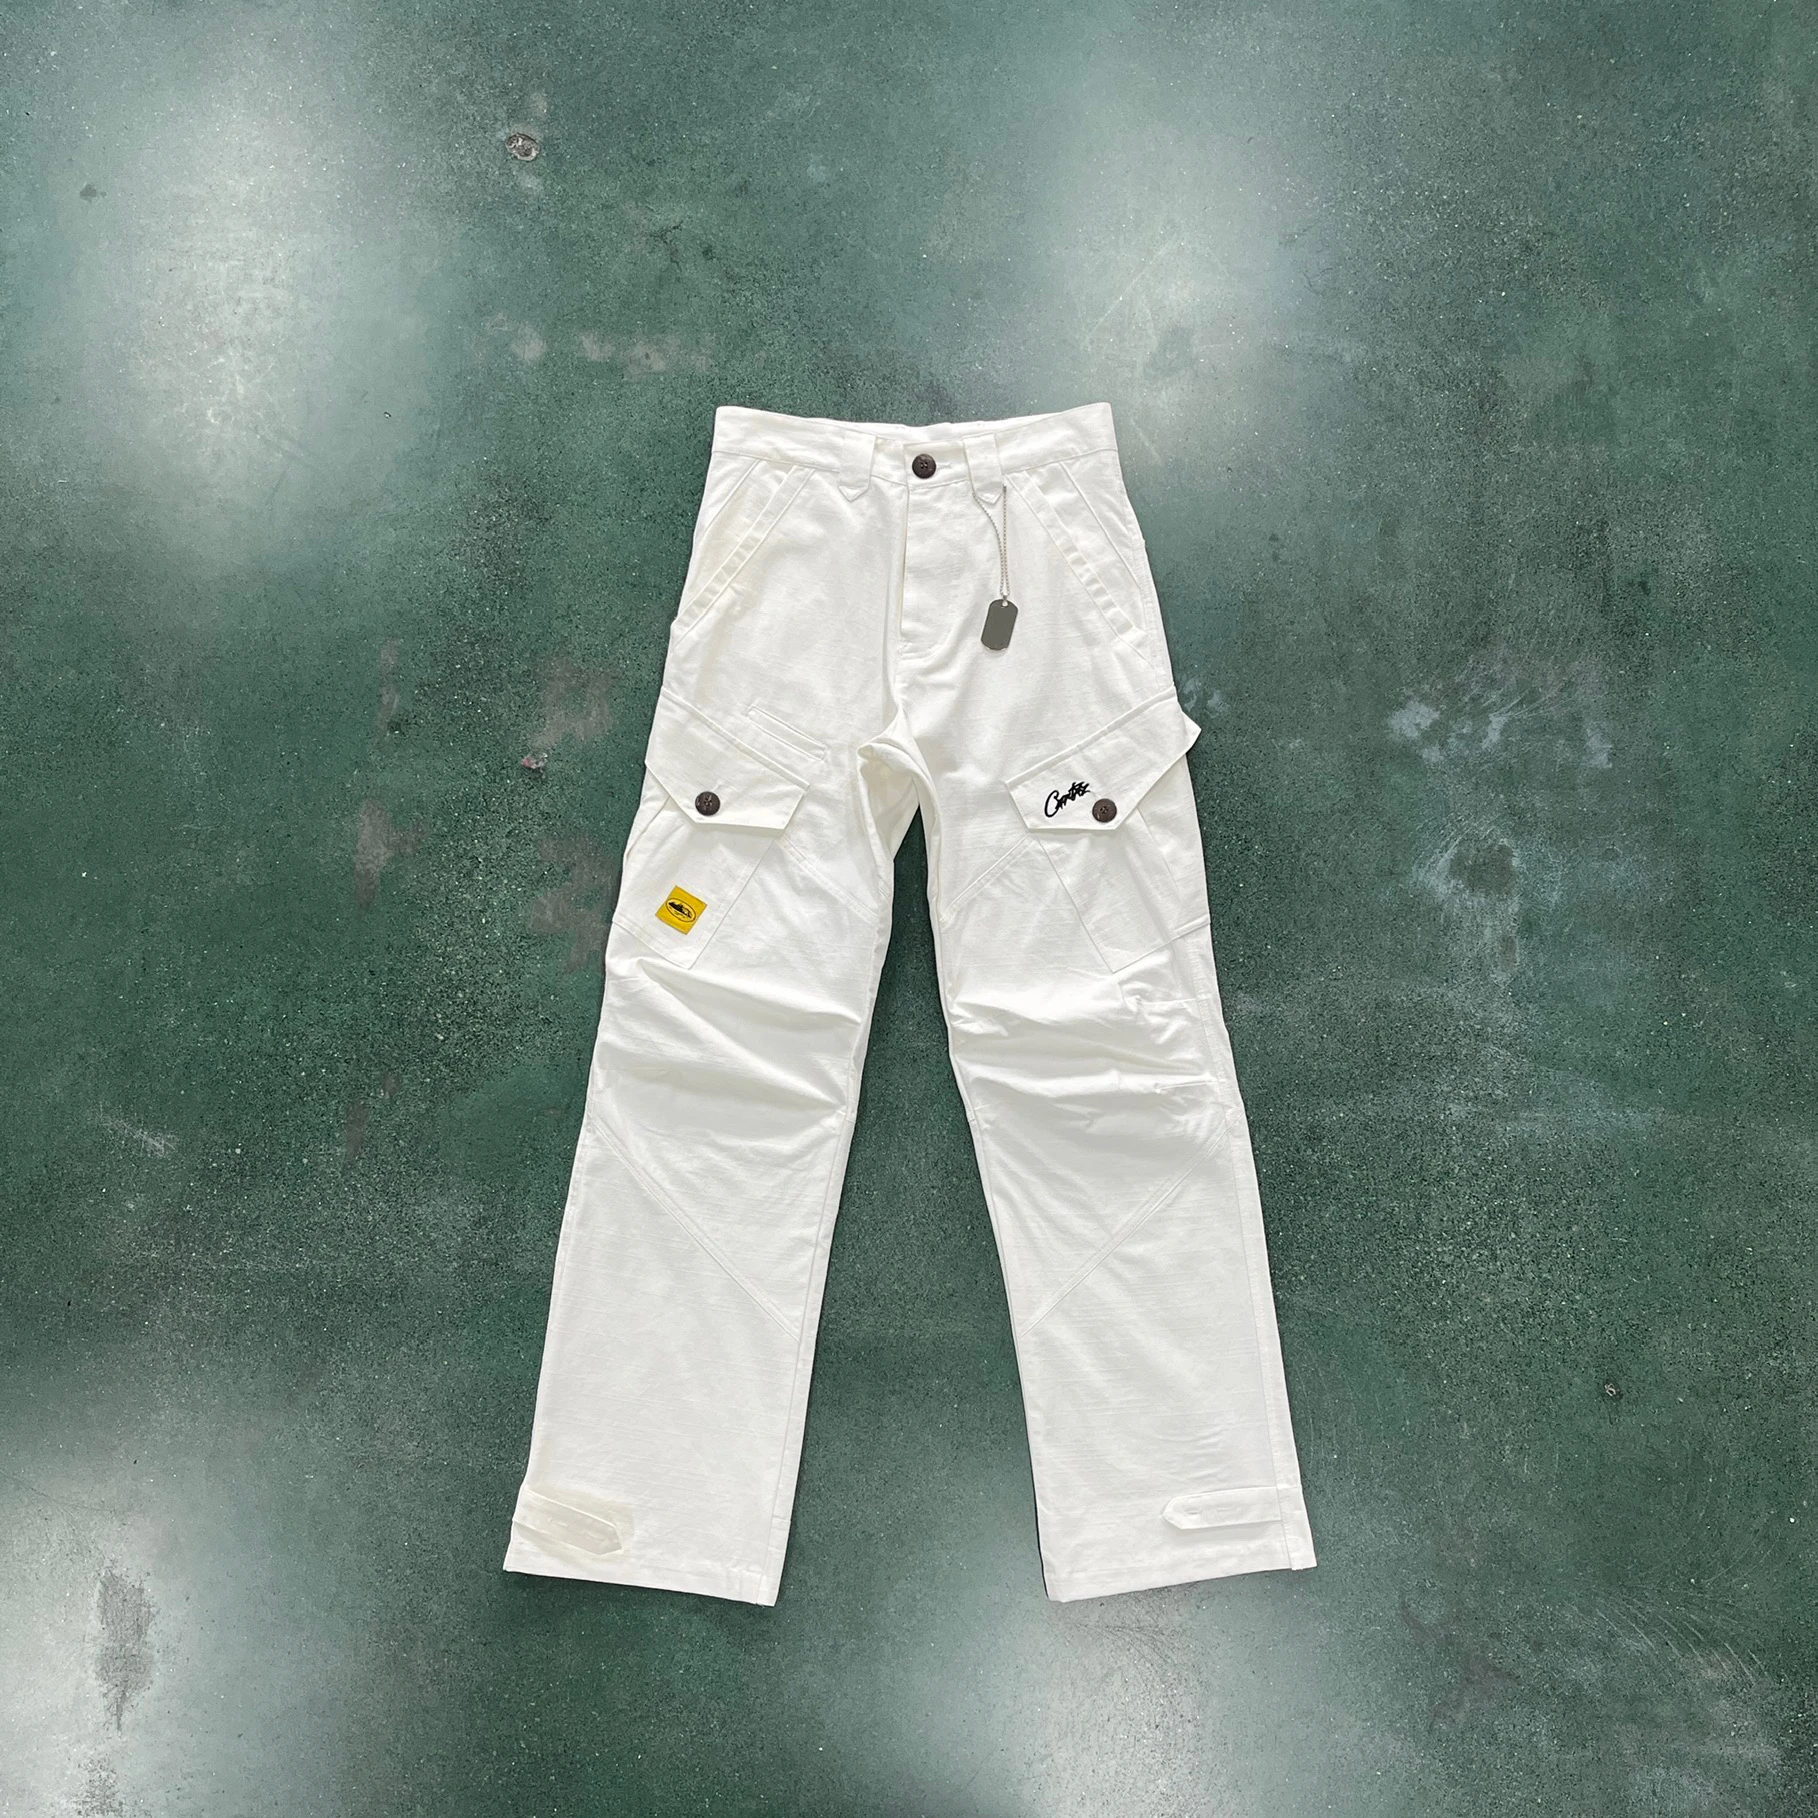 

Alcatraz White Black Overalls Embroidered Leisure Pants